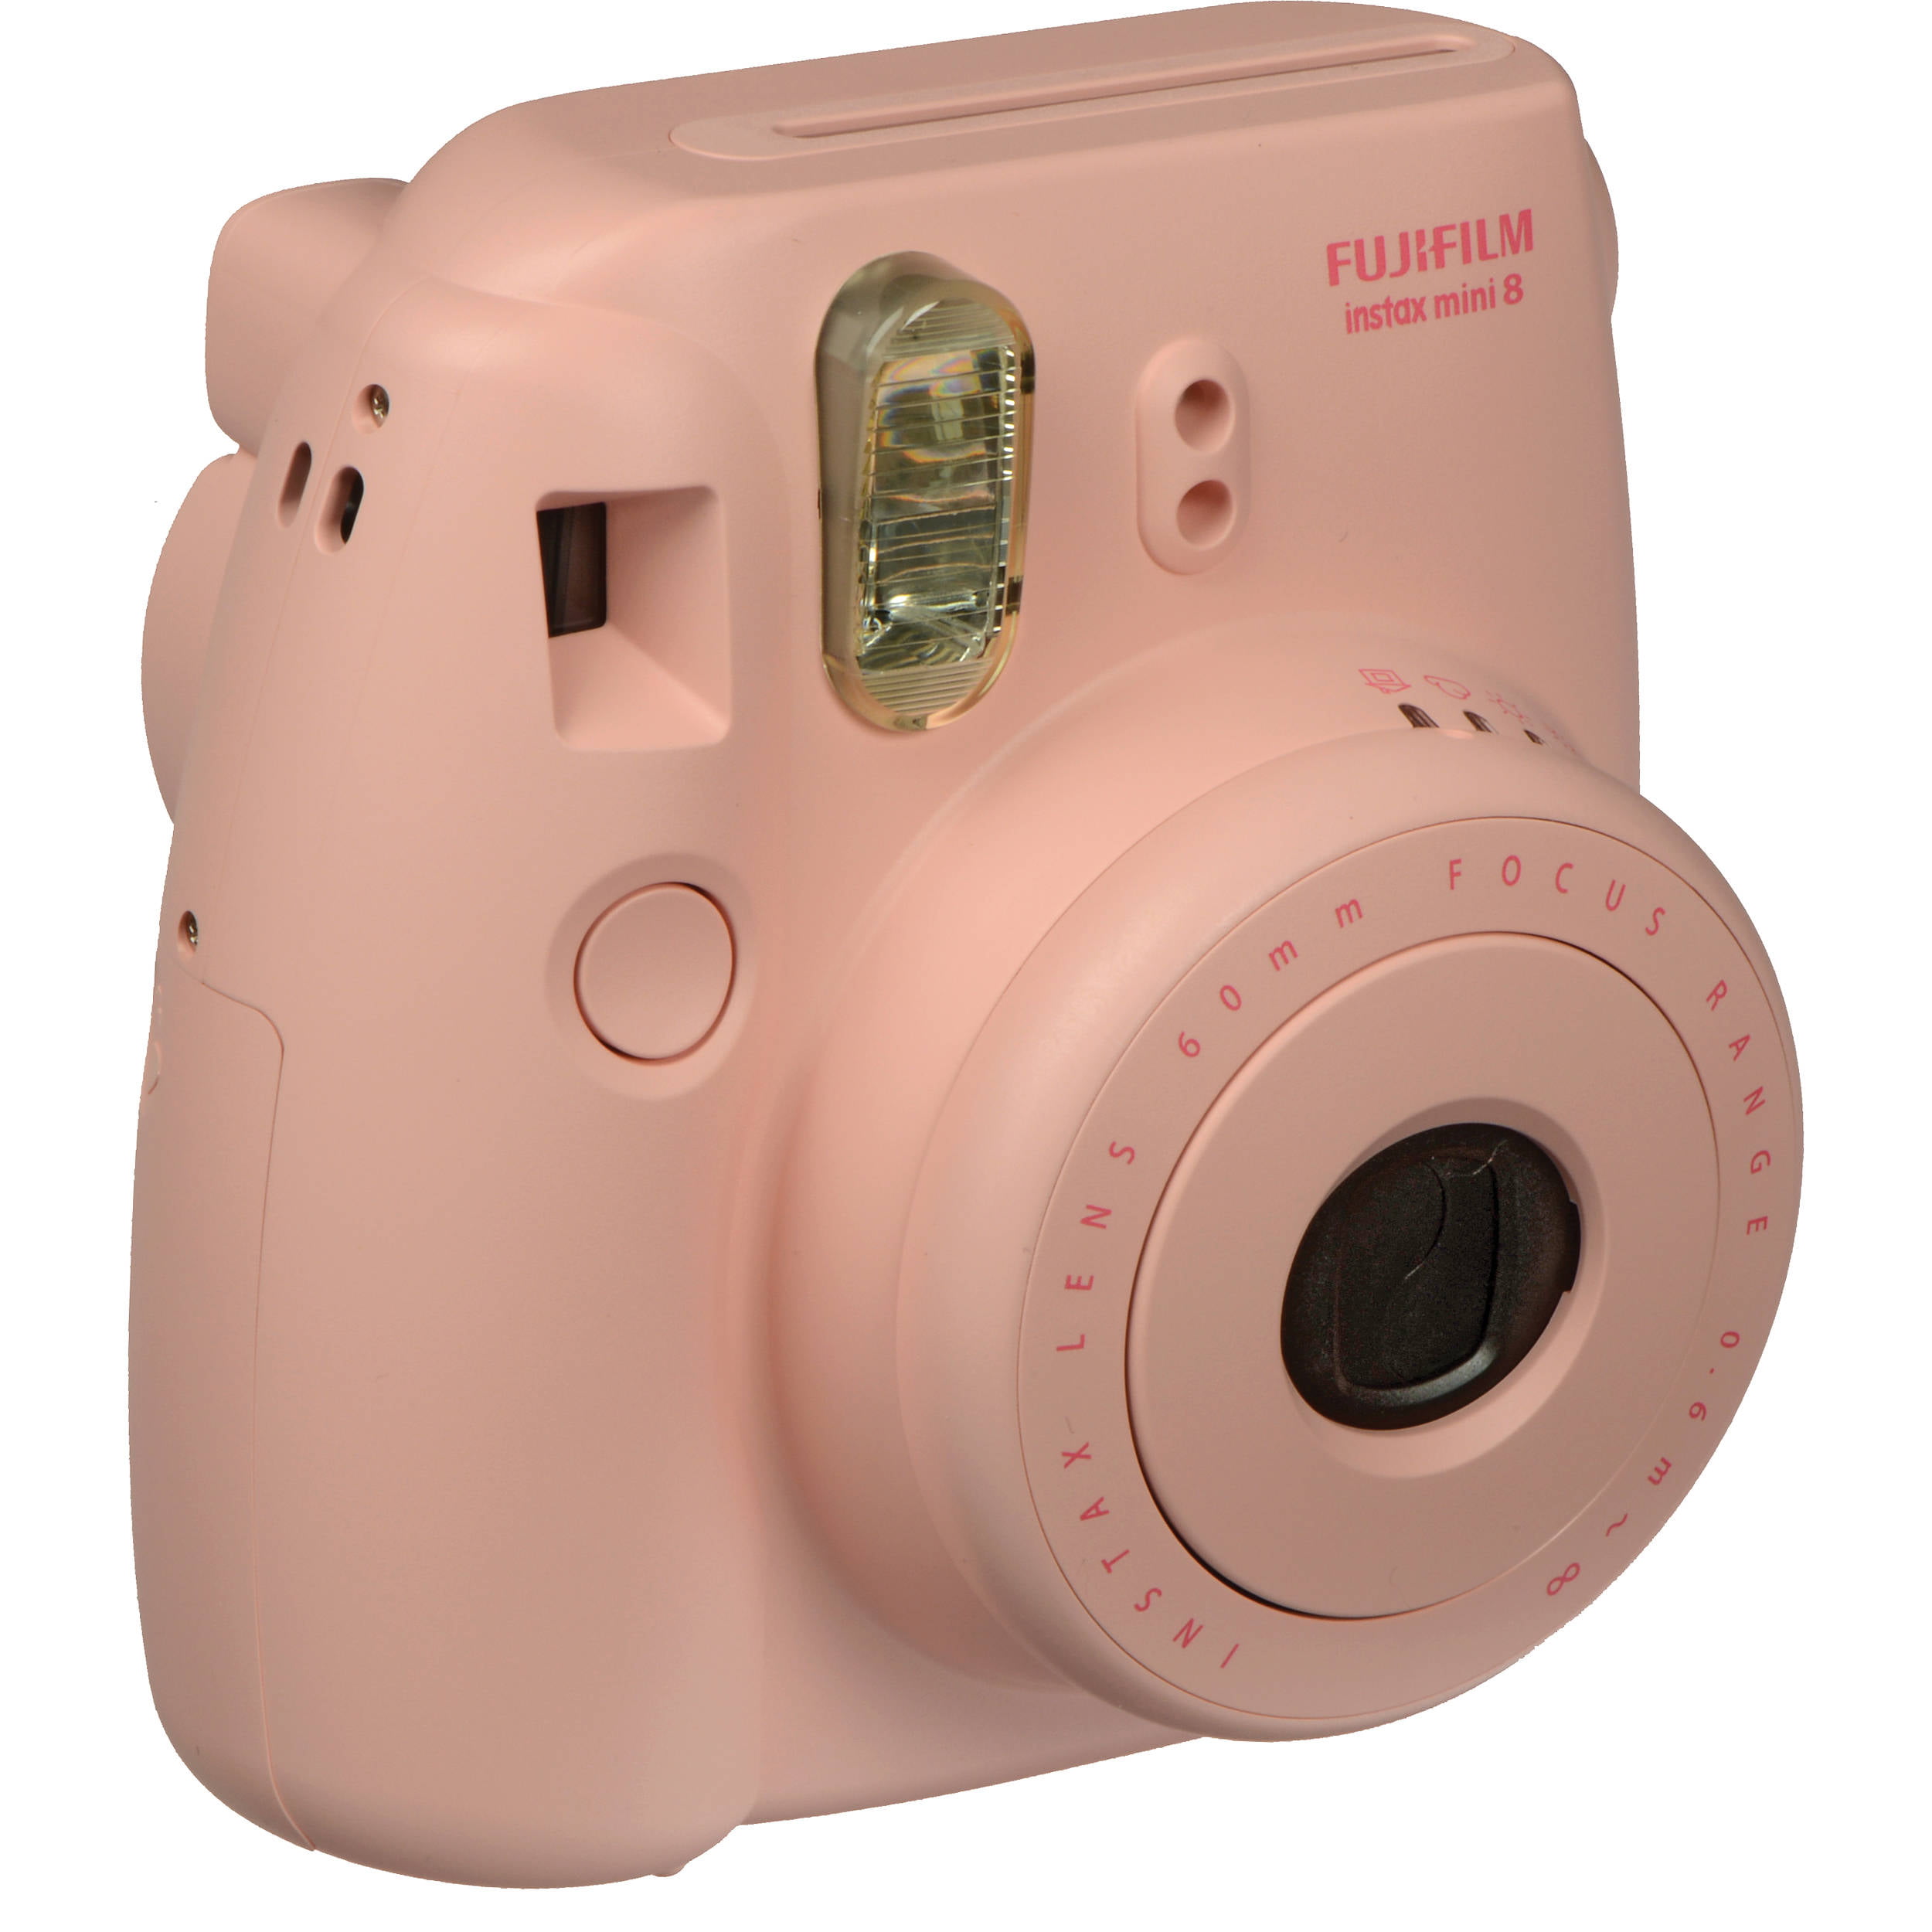 ga sightseeing Rang welzijn Fujifilm Instax Mini 8 Instant Film Camera - Pink 16273415 - Walmart.com